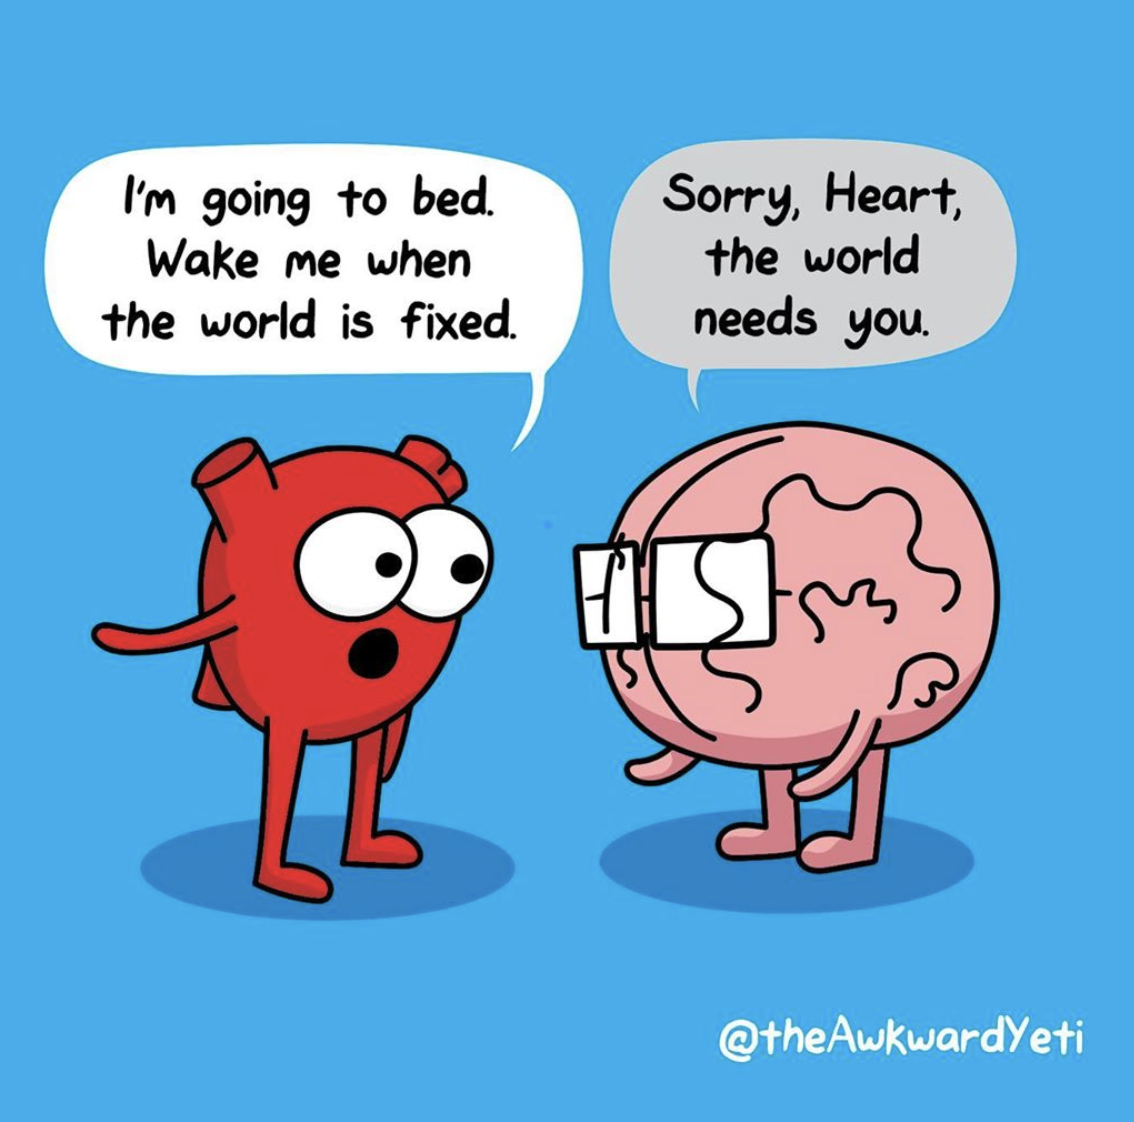 thebrain and heart